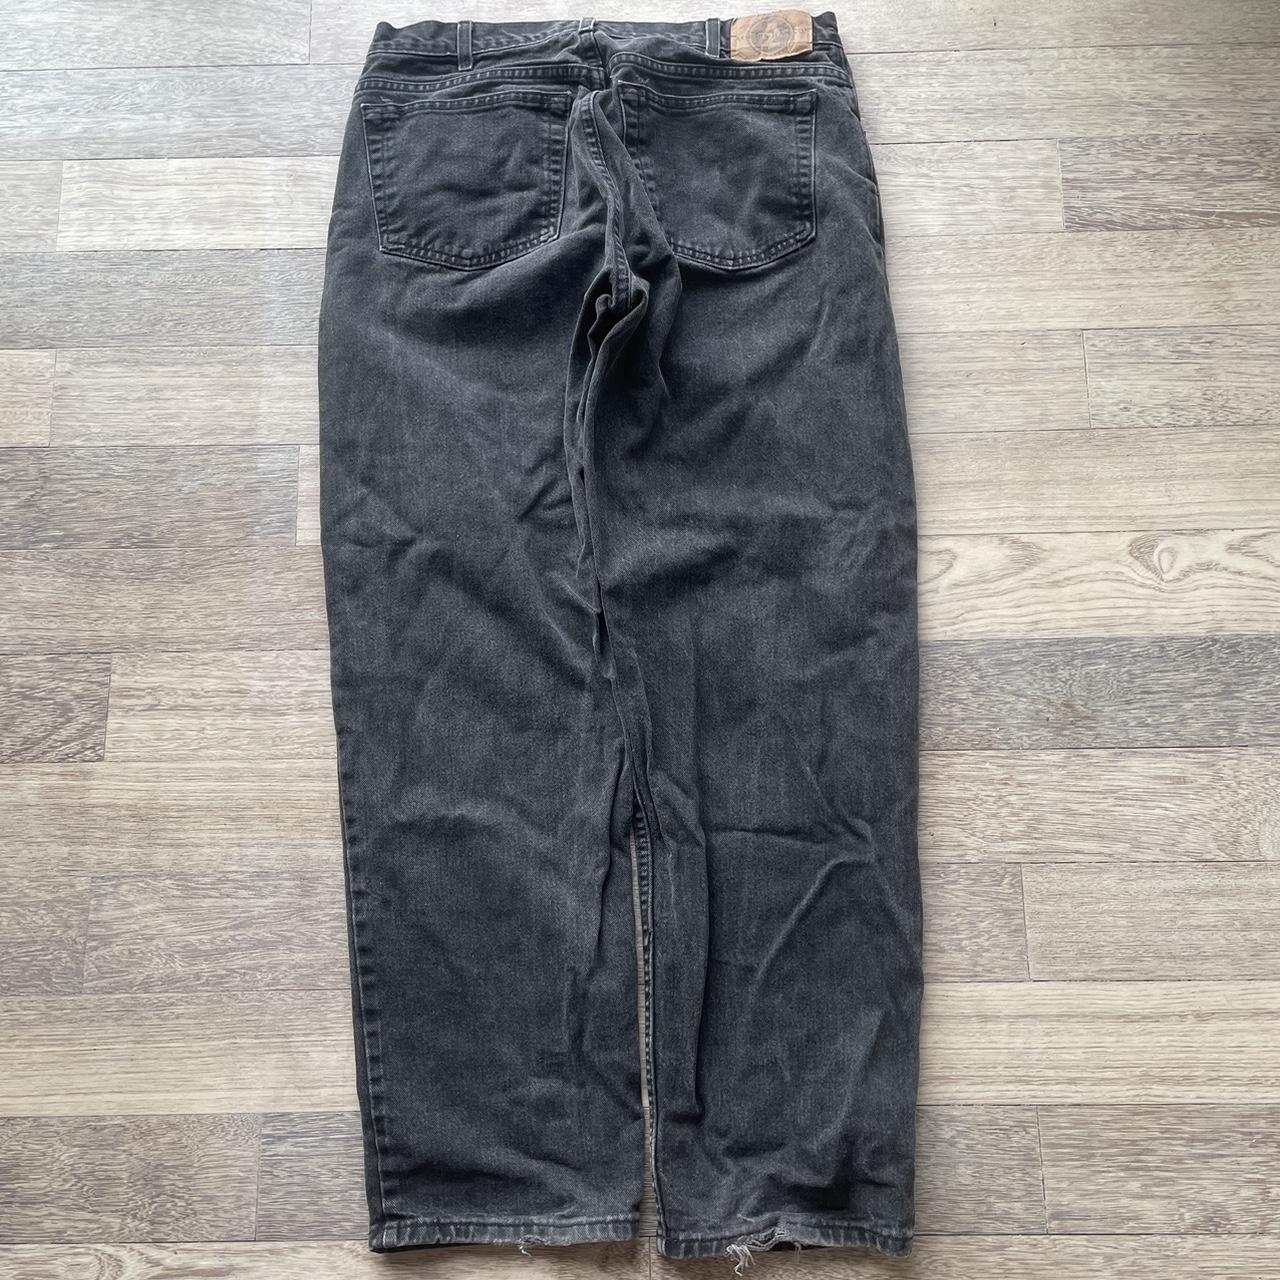 Vintage 90s dark washed baggy USA made jeans. Come... - Depop